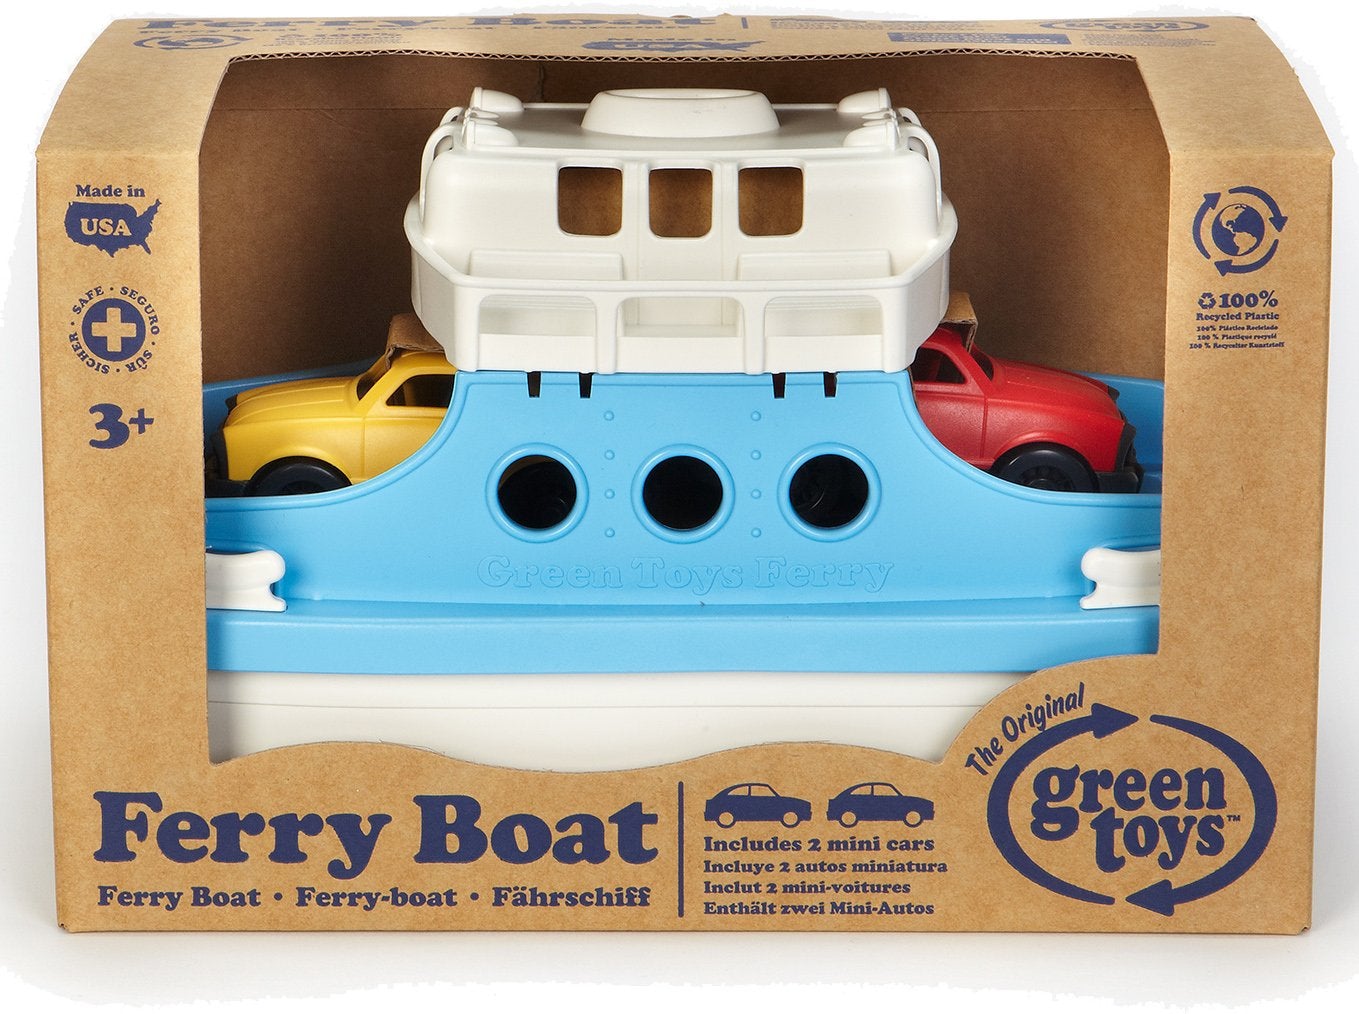 Green Toys Ferry Boat with Mini Cars Bathtub Toy, Blue/White - ANB Baby -bath toy